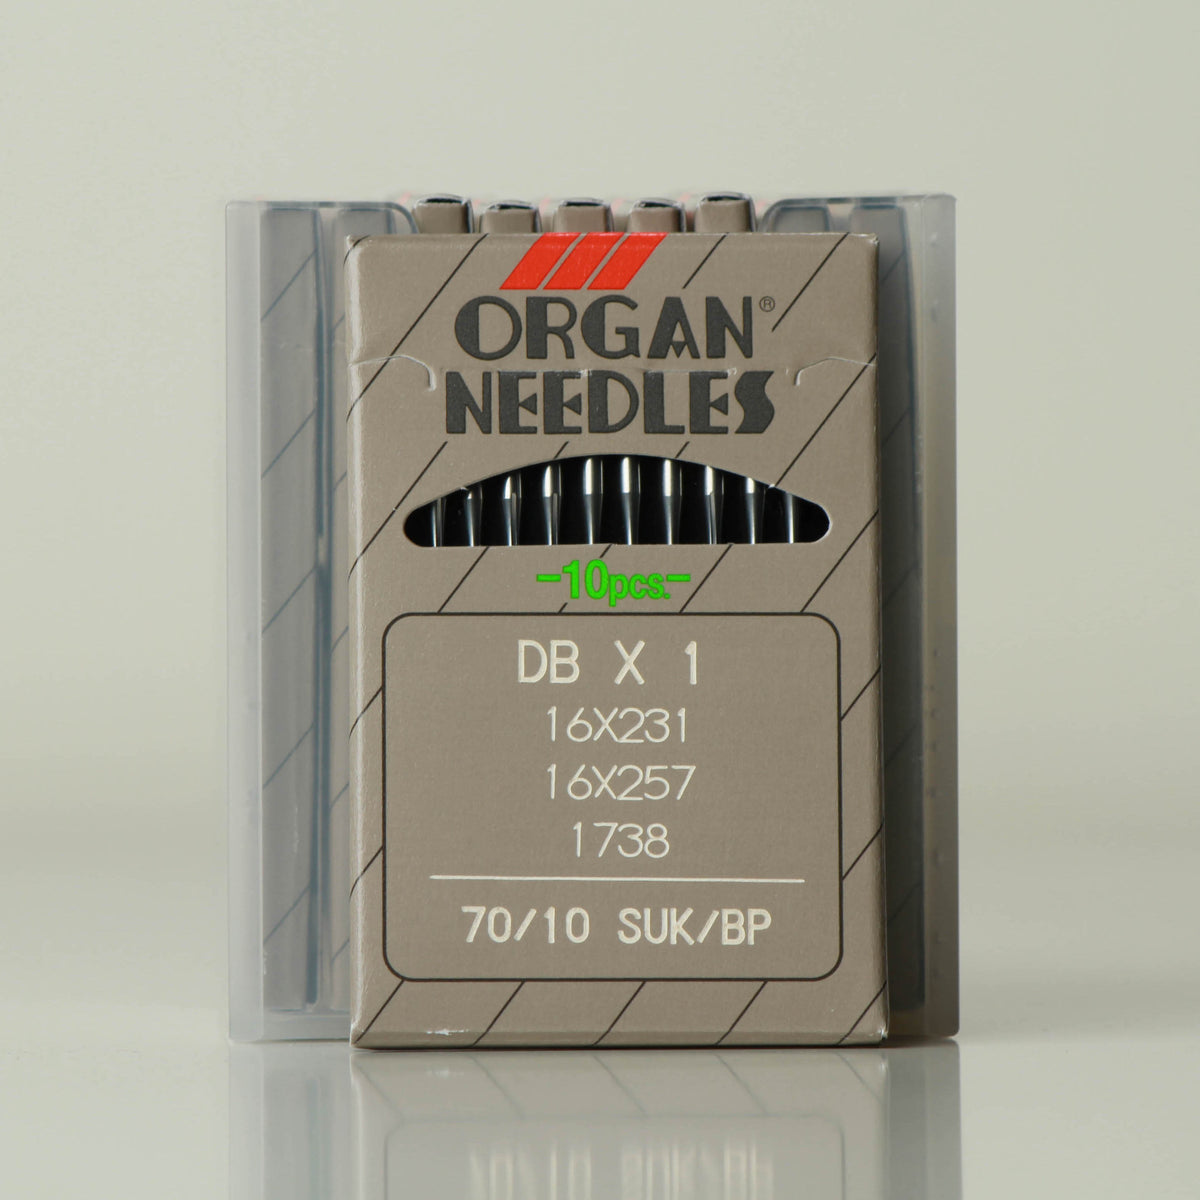 10pk Organ Needles, Type 16x257 (Round Shank) : Sewing Parts Online